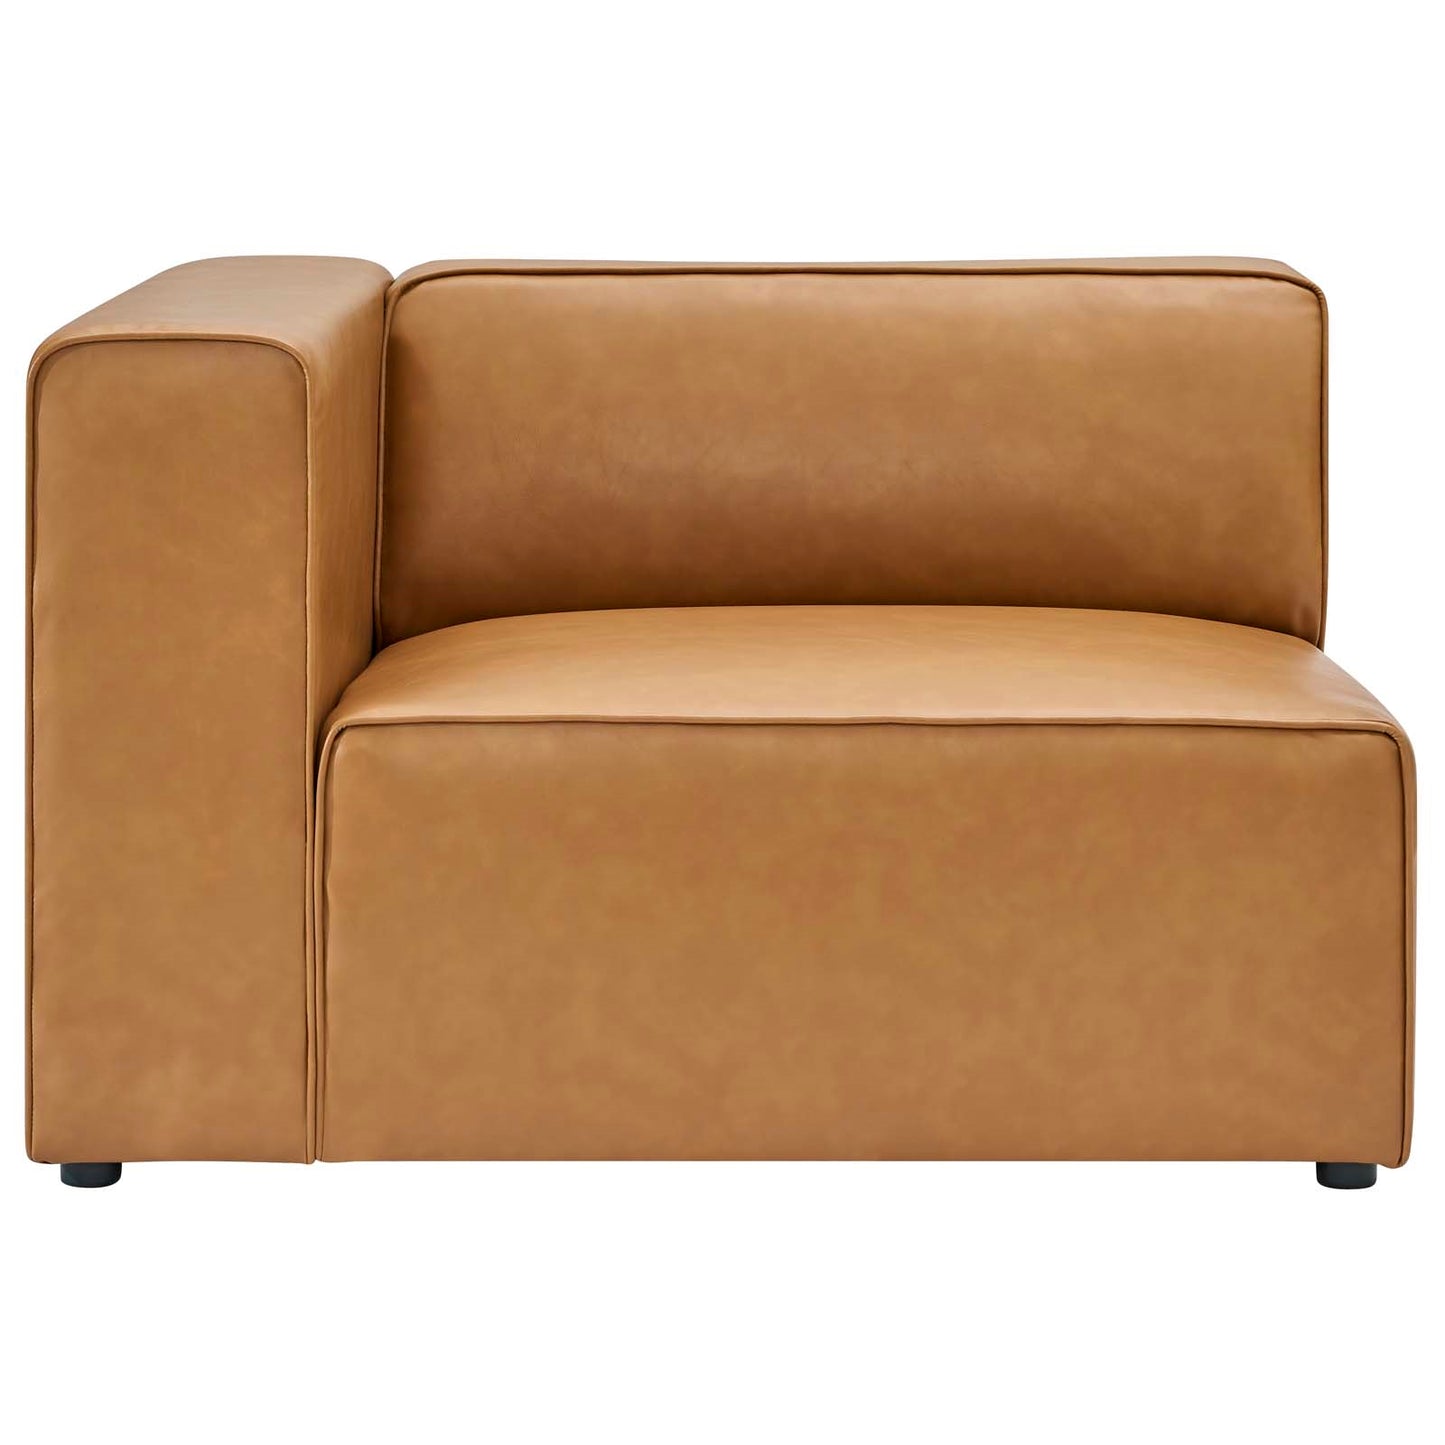 Lane Vegan 3 Seater Leather Sofa and Ottoman Set